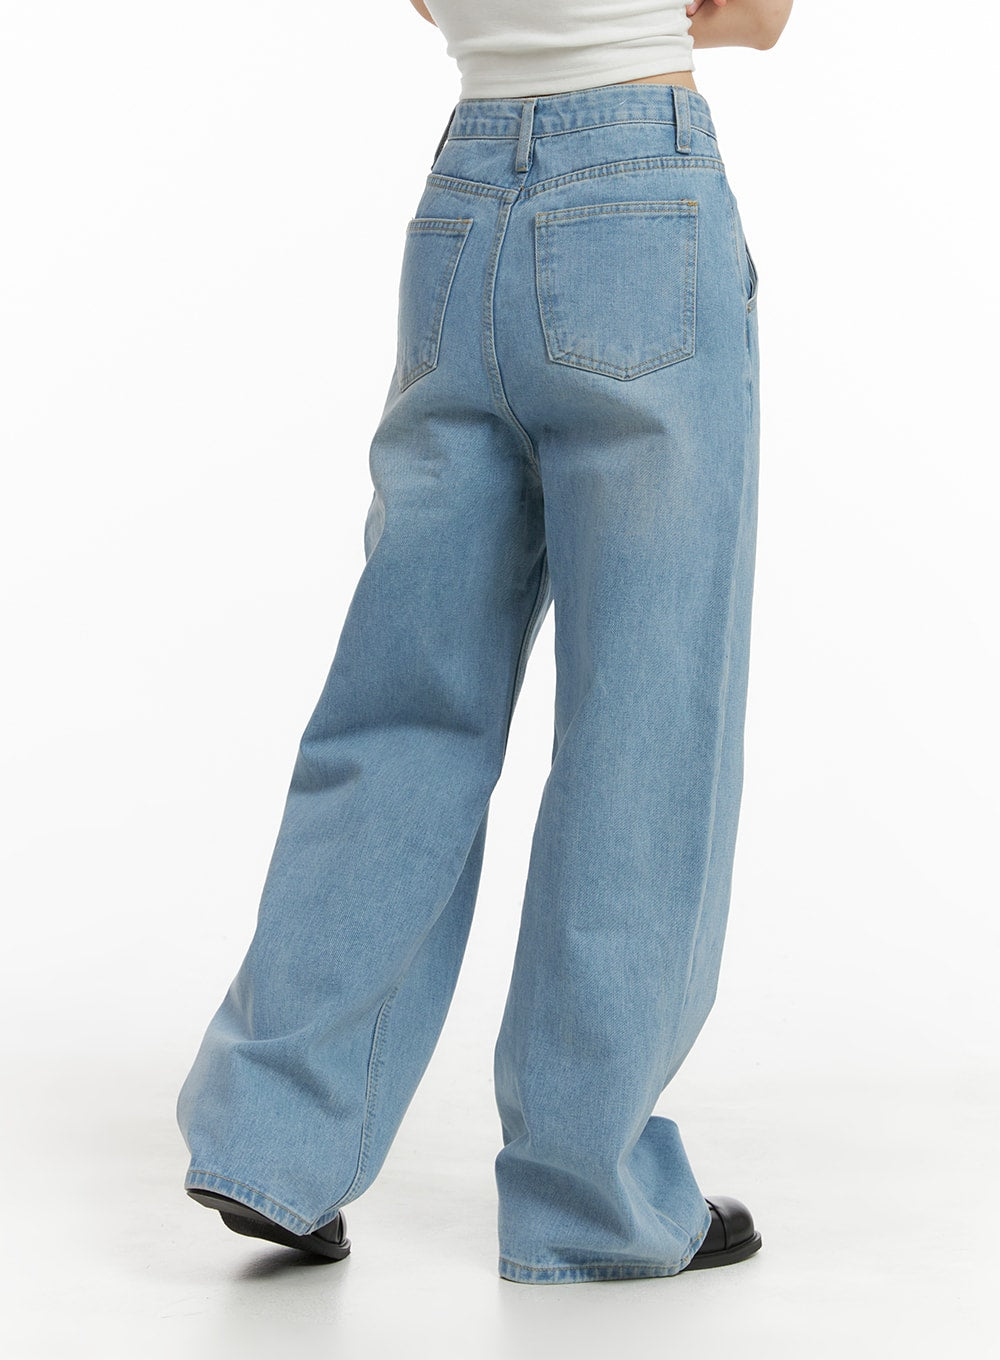 light-washed-baggy-jeans-om408